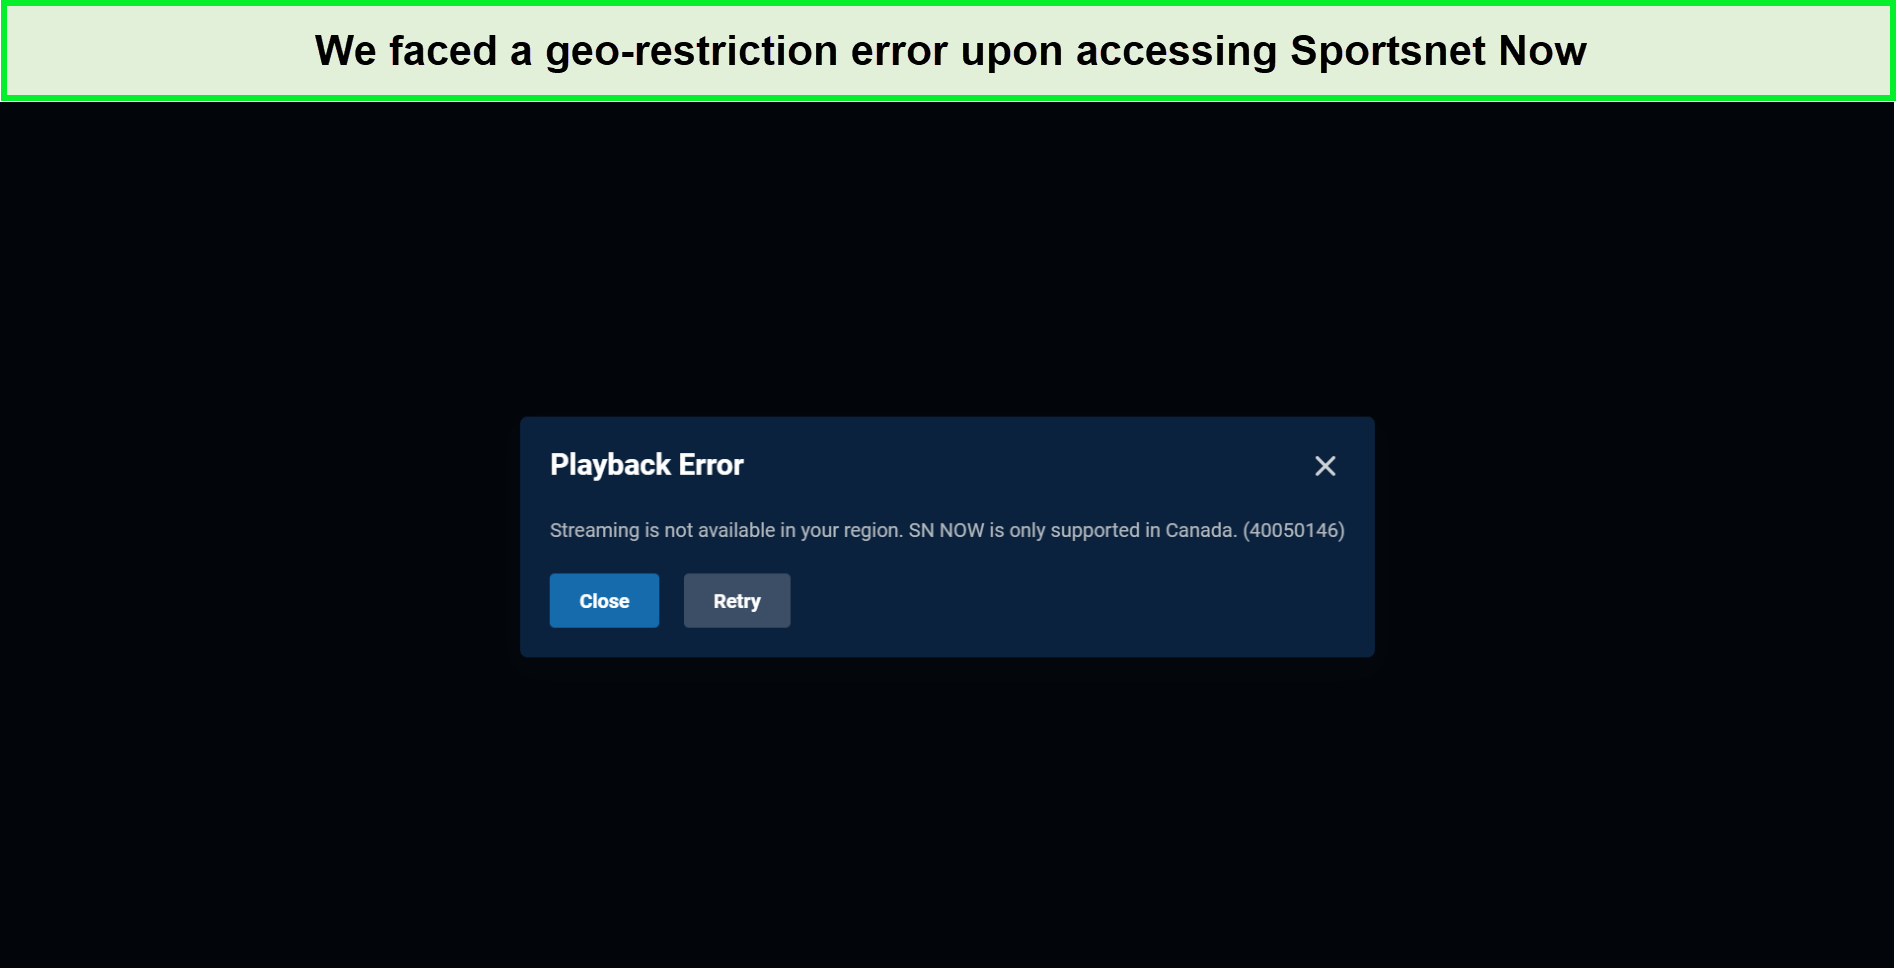 sportsnet-now-in-UAE-geo-restriction-error